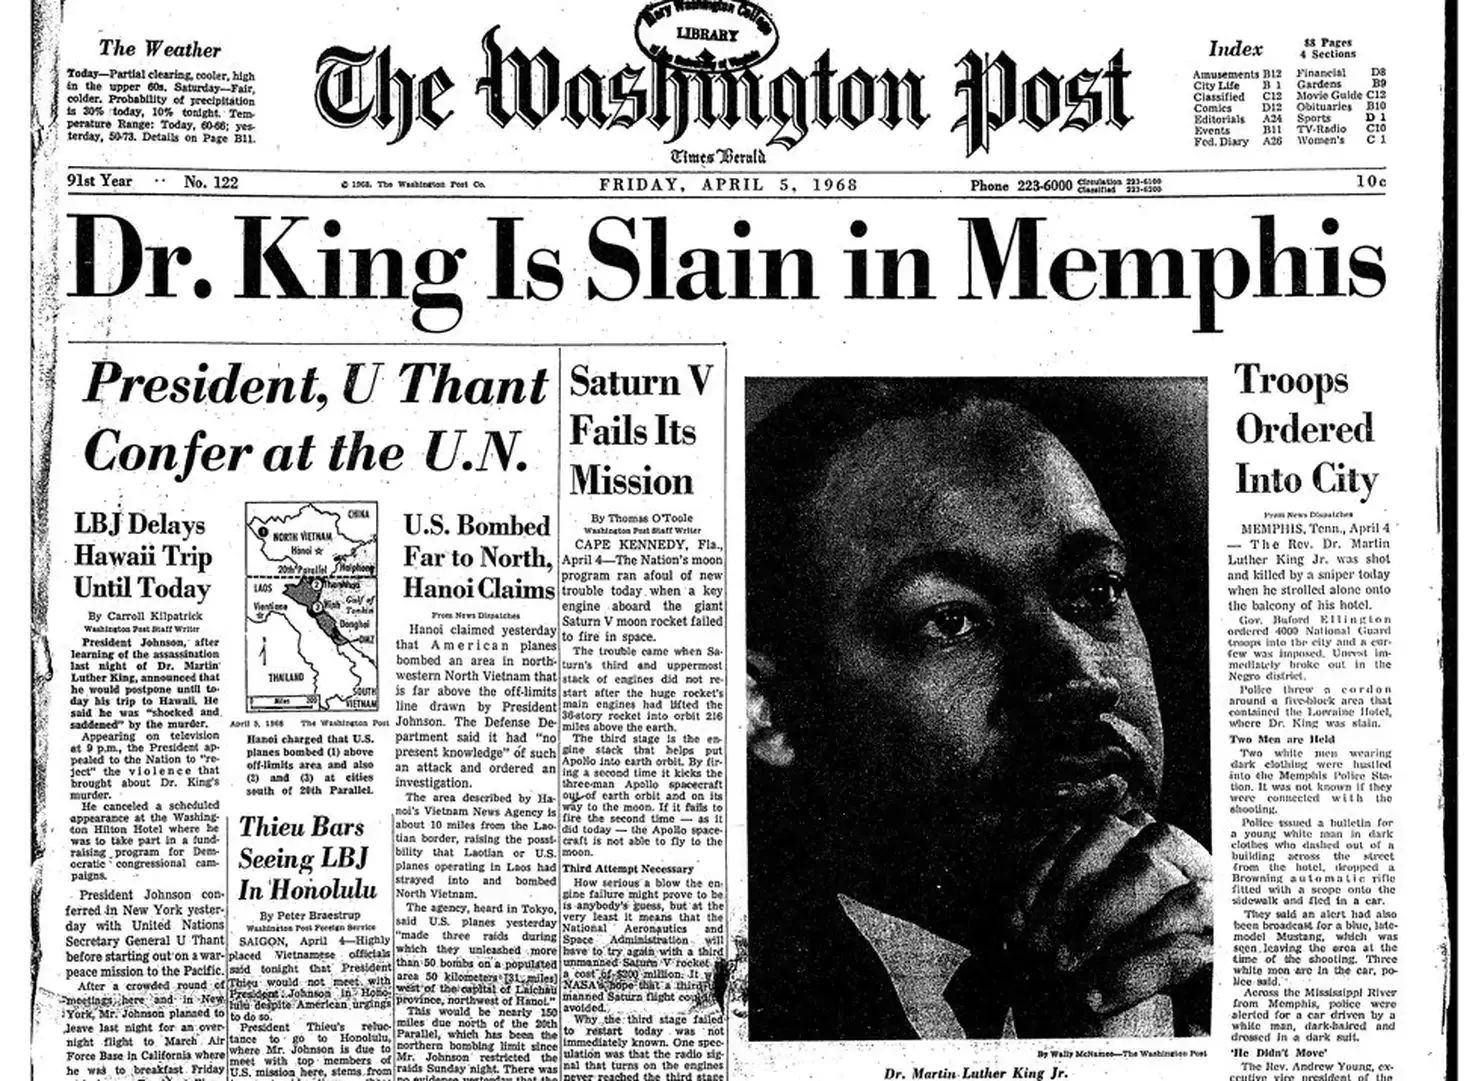 The front page of The Washington Post on April 5, 1968. (Washington Post)